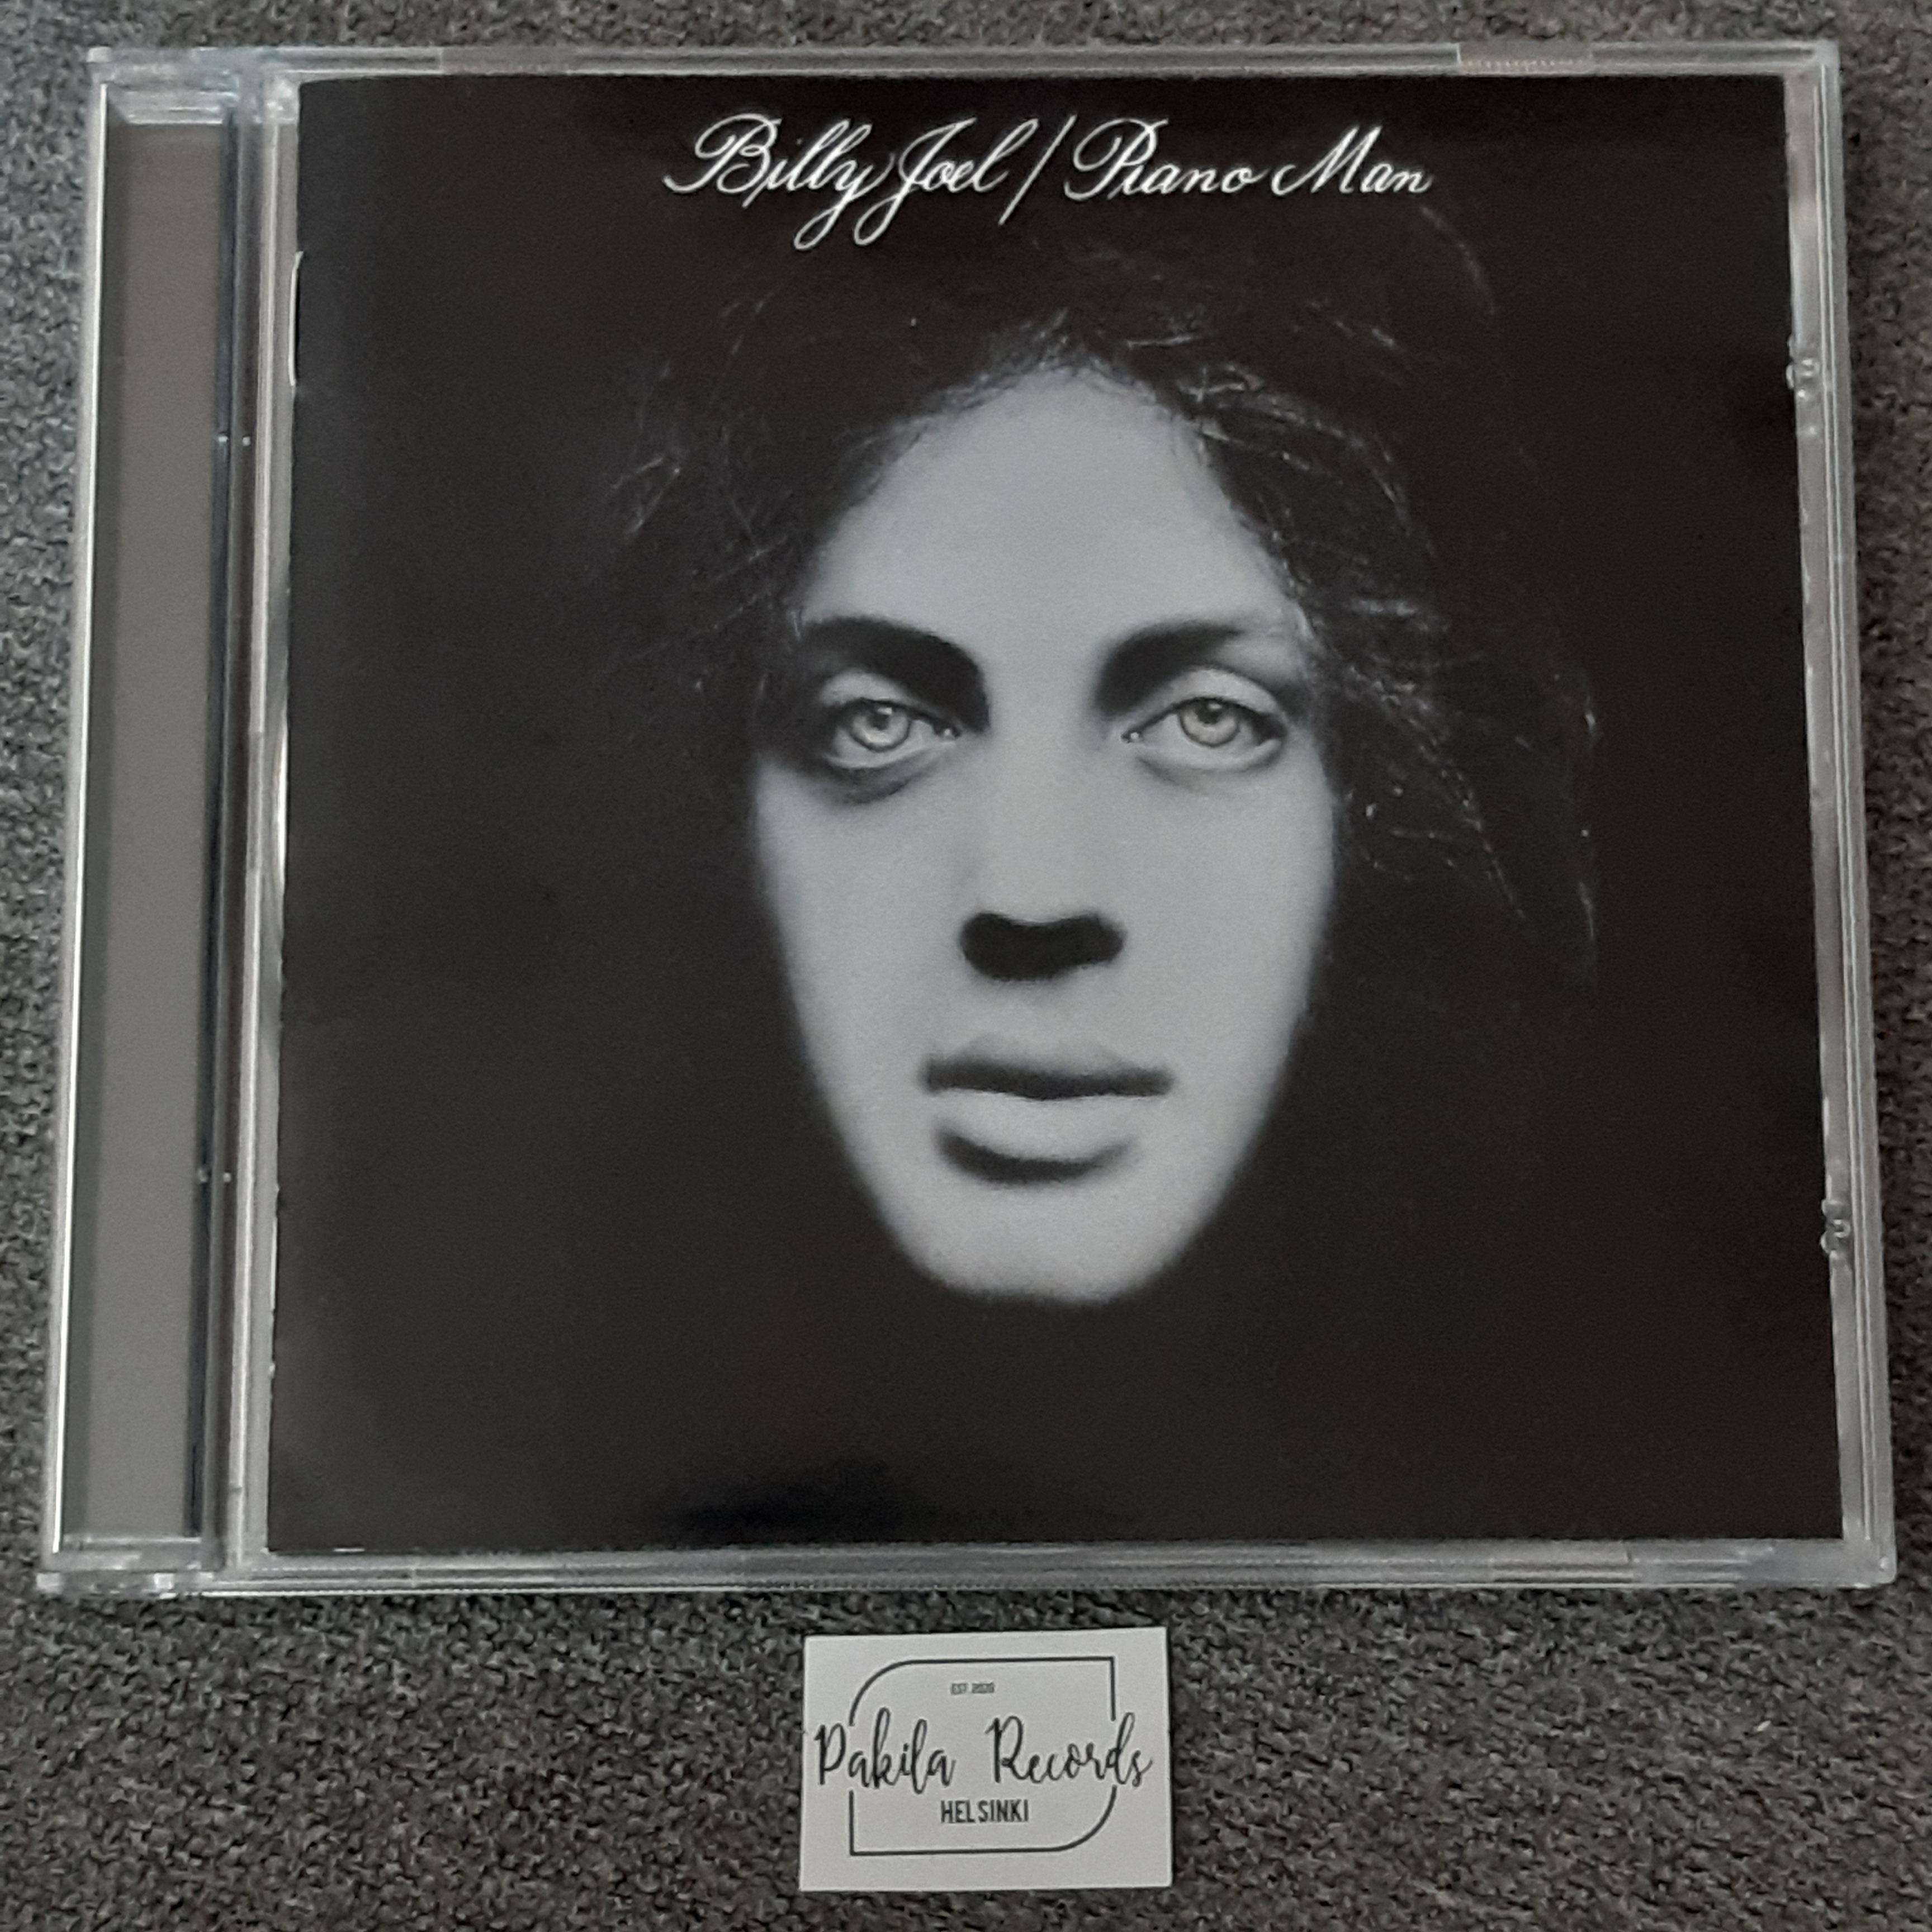 Billy Joel - Piano Man - CD (käytetty)